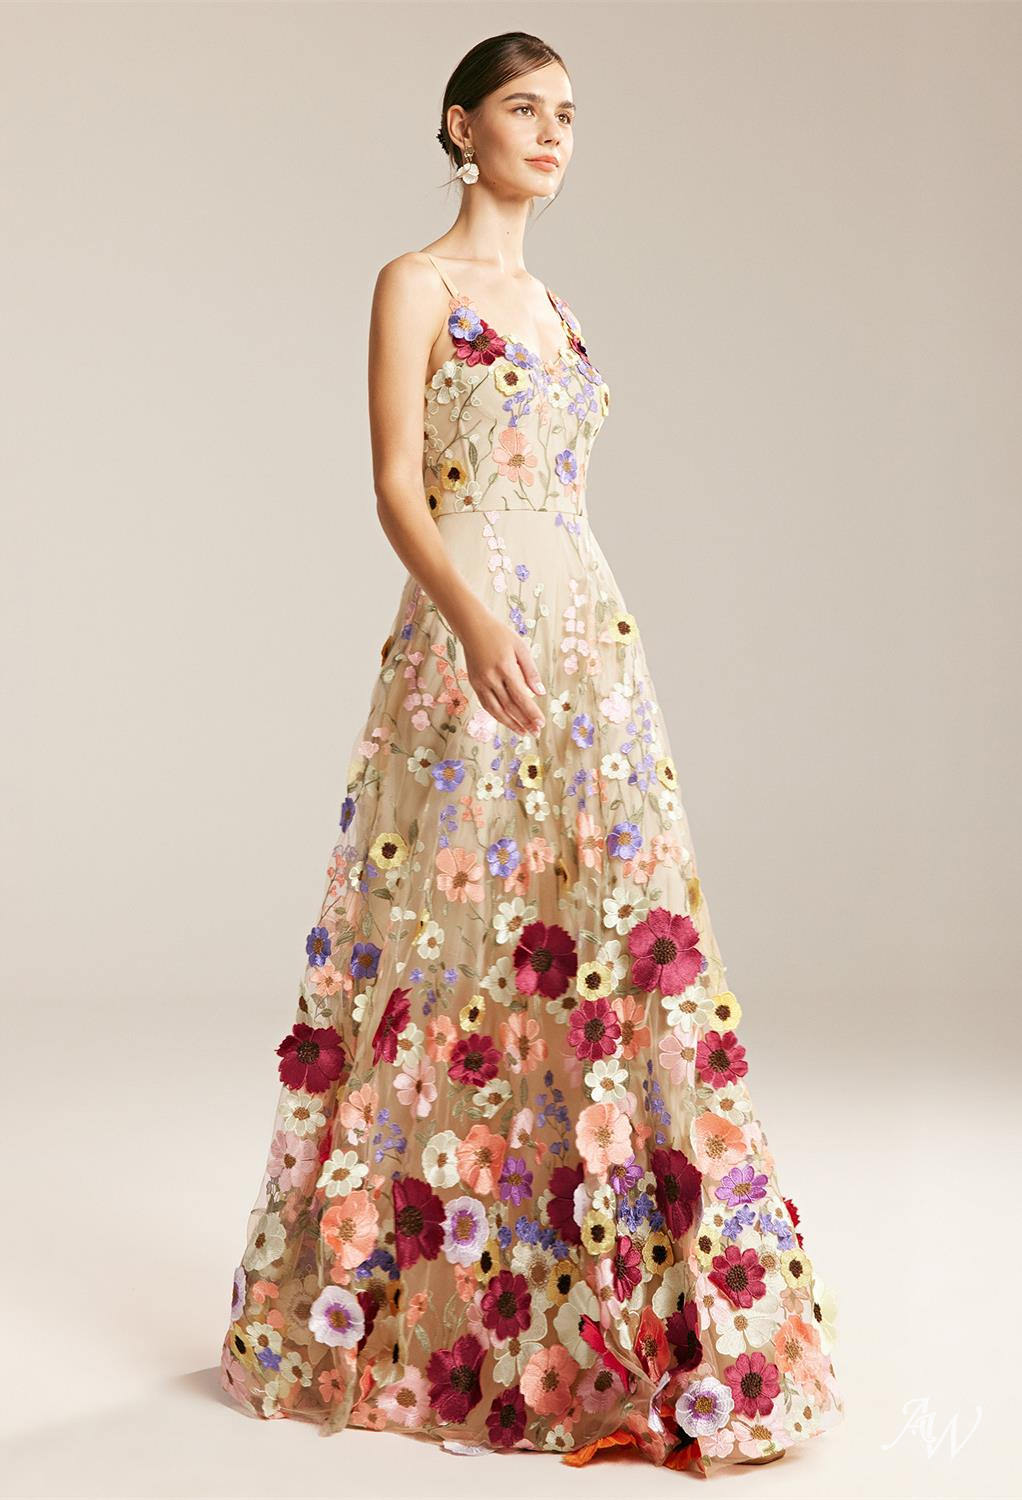 Colorful Floral Wedding Dress